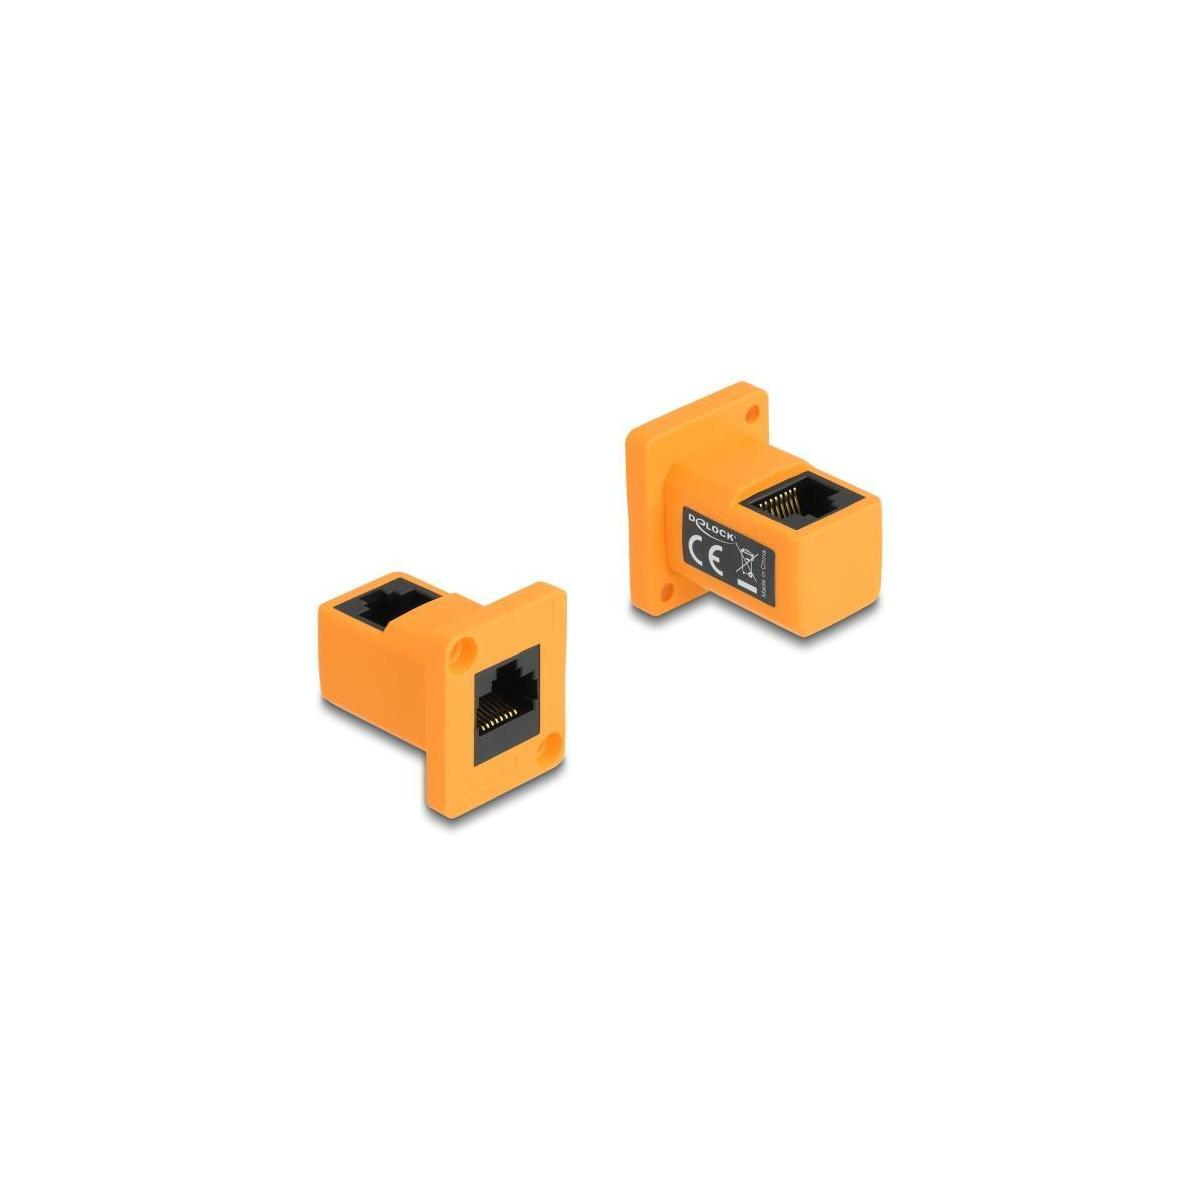 DELOCK 87997 Adapter, Orange